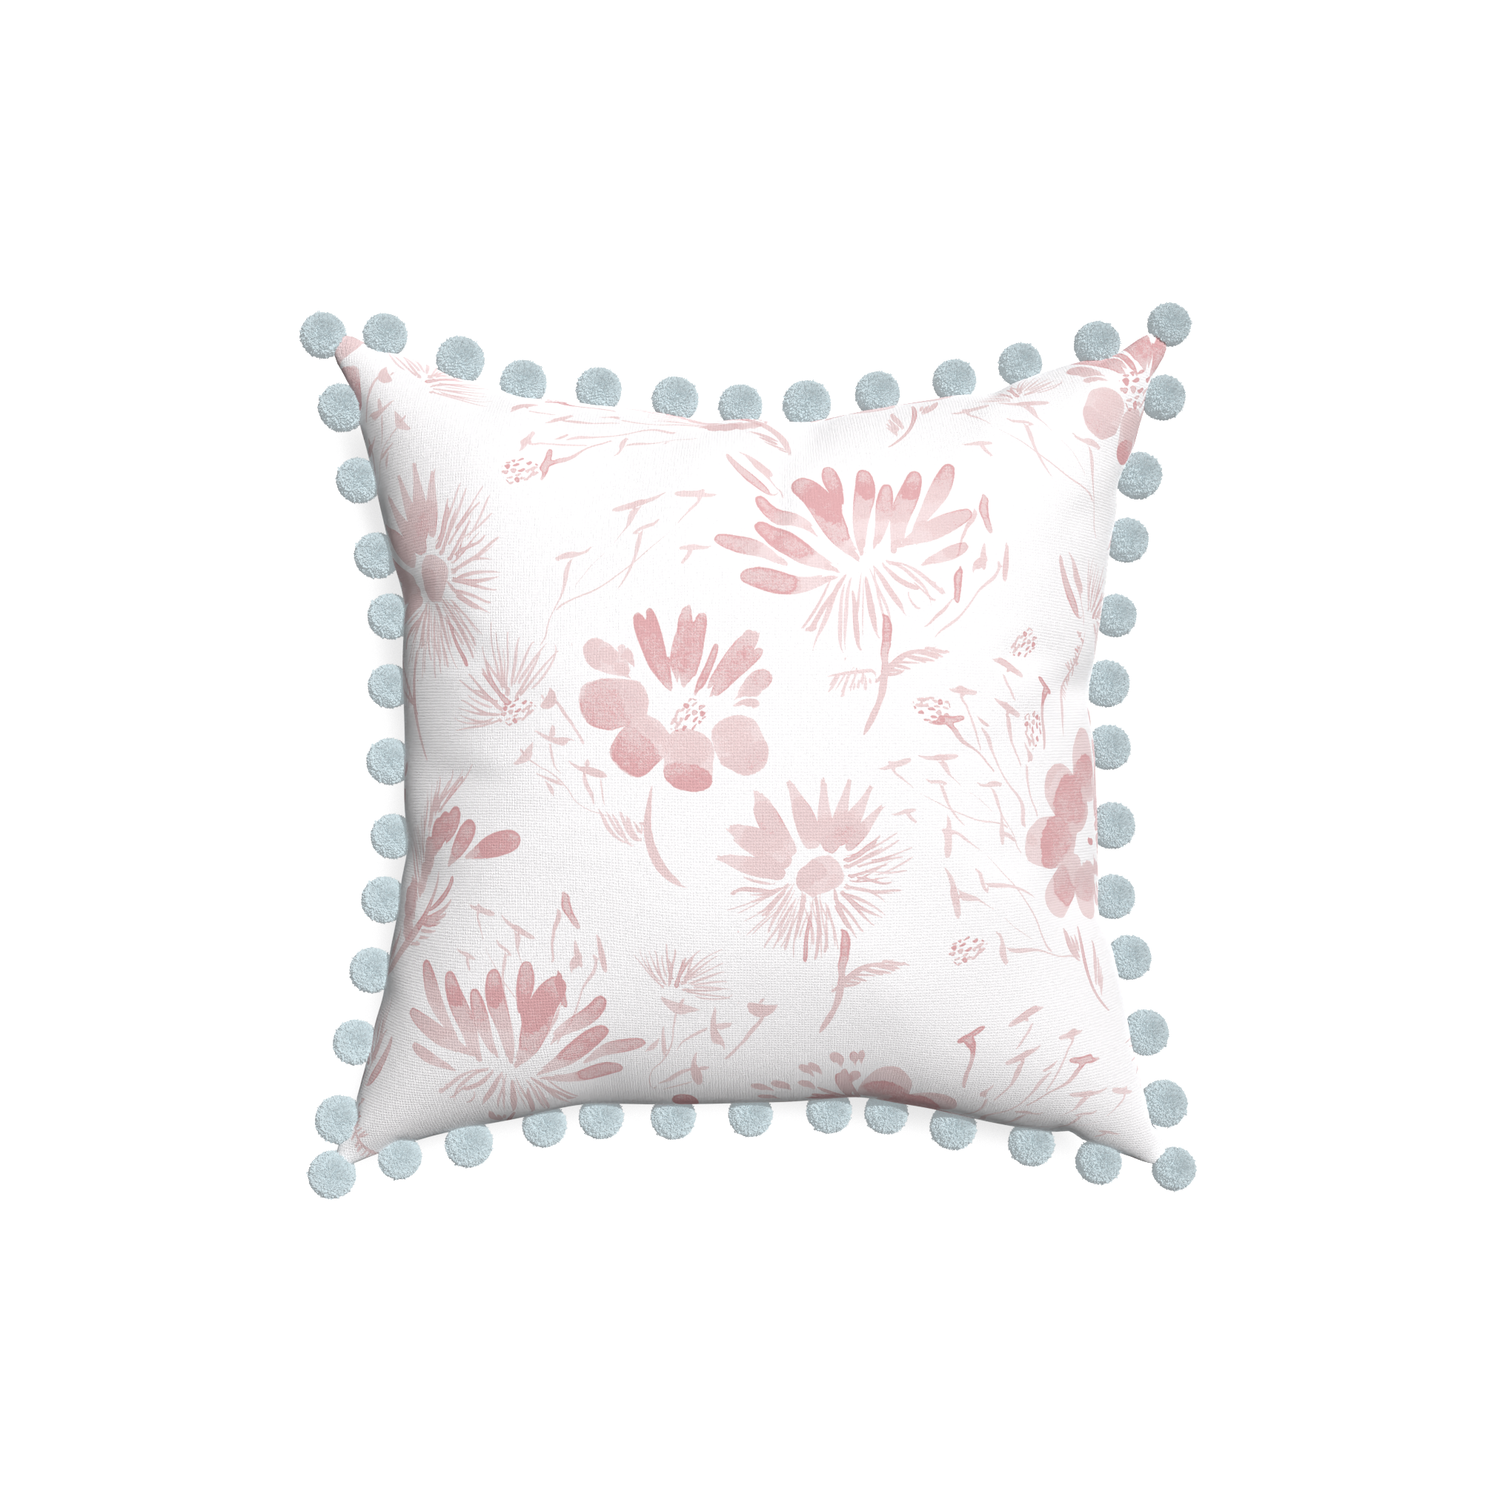 18-square blake custom pillow with powder pom pom on white background